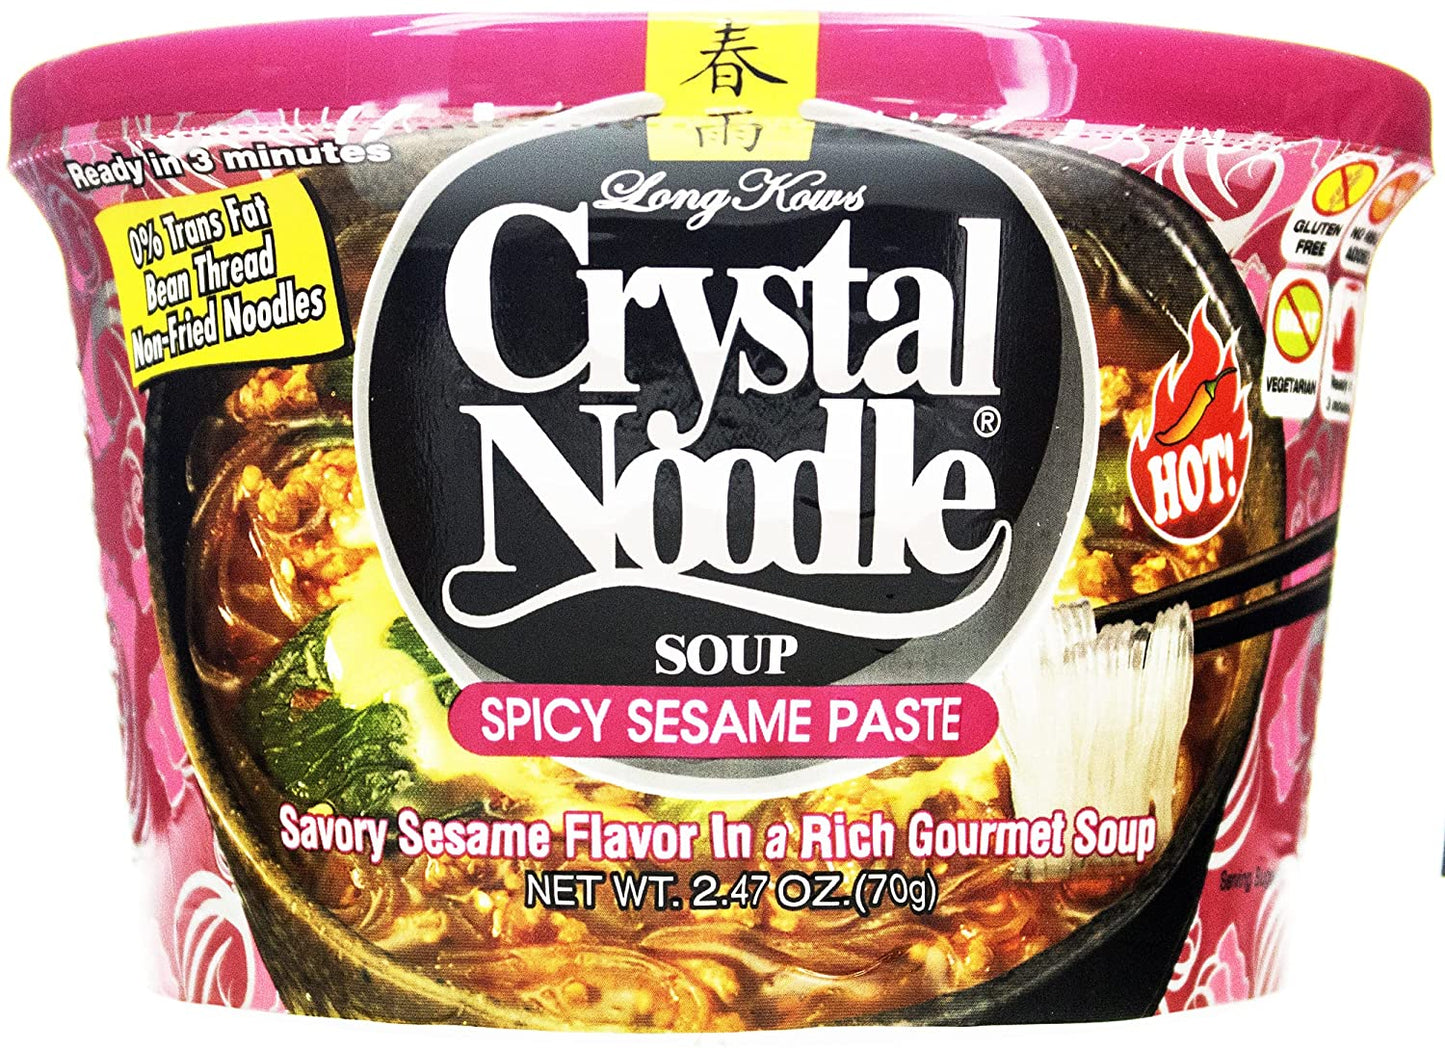 Crystal Noodles Soup Spicy Sesame Paste, 2.47 oz (Pack of 6)